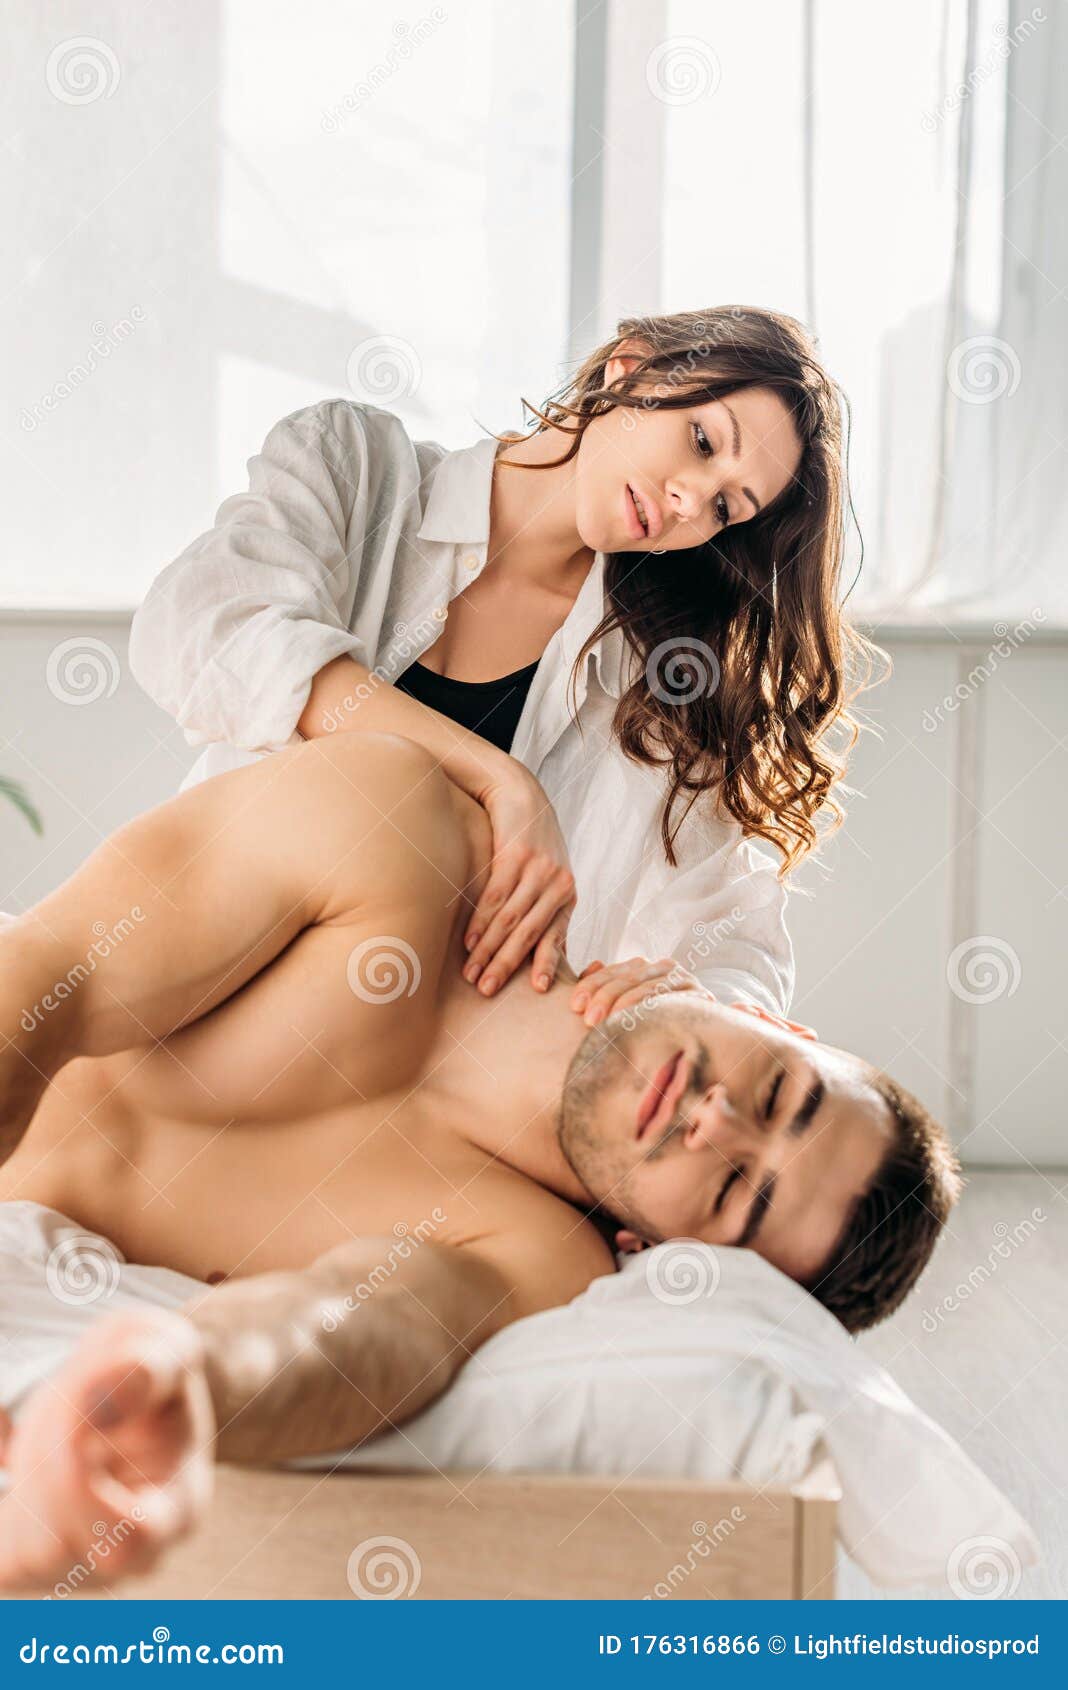 486 Erotic Massage Stock Photos picture